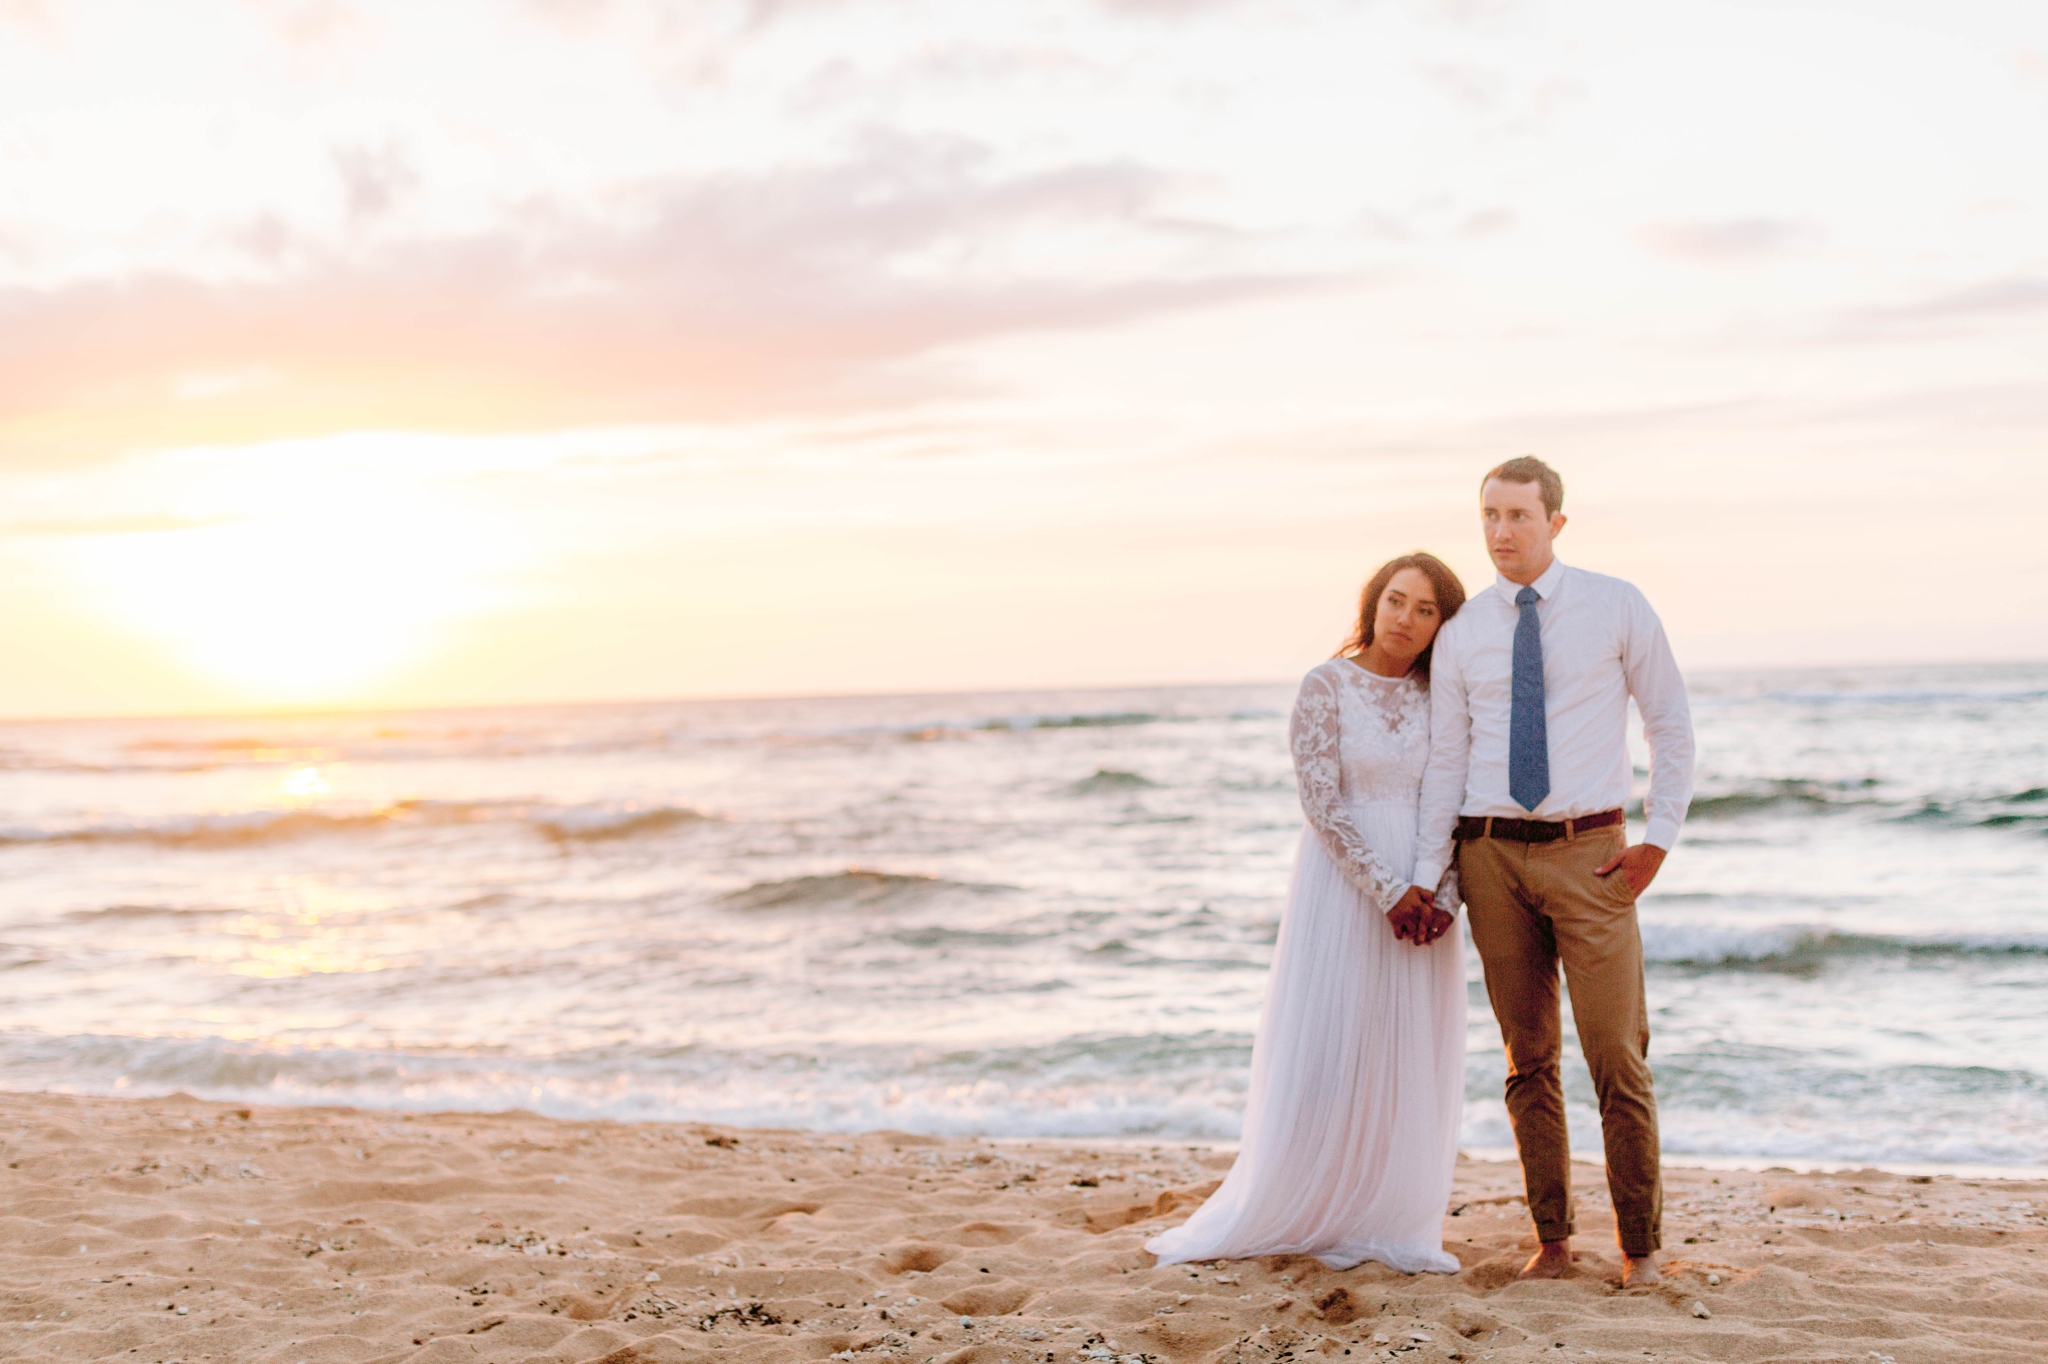  Beach Wedding Portraits at Sunset in Hawaii - Ana + Elijah - Wedding at Loulu Palm in Haleiwa, HI - Oahu Hawaii Wedding Photographer - #hawaiiweddingphotographer #oahuweddings #hawaiiweddings 